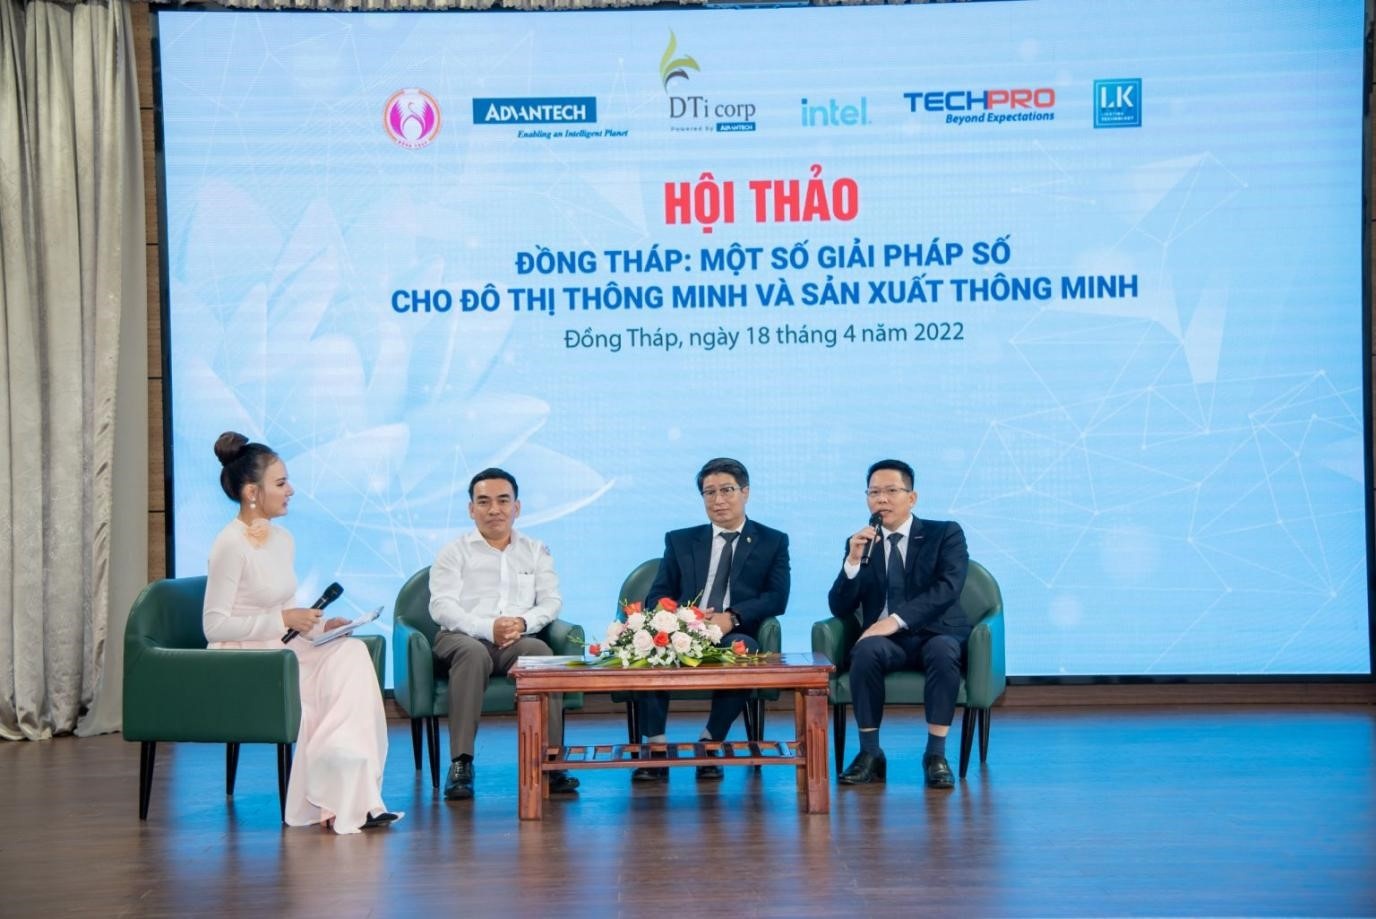 Advantech accompanies Dong Thap on its digital transformation journey